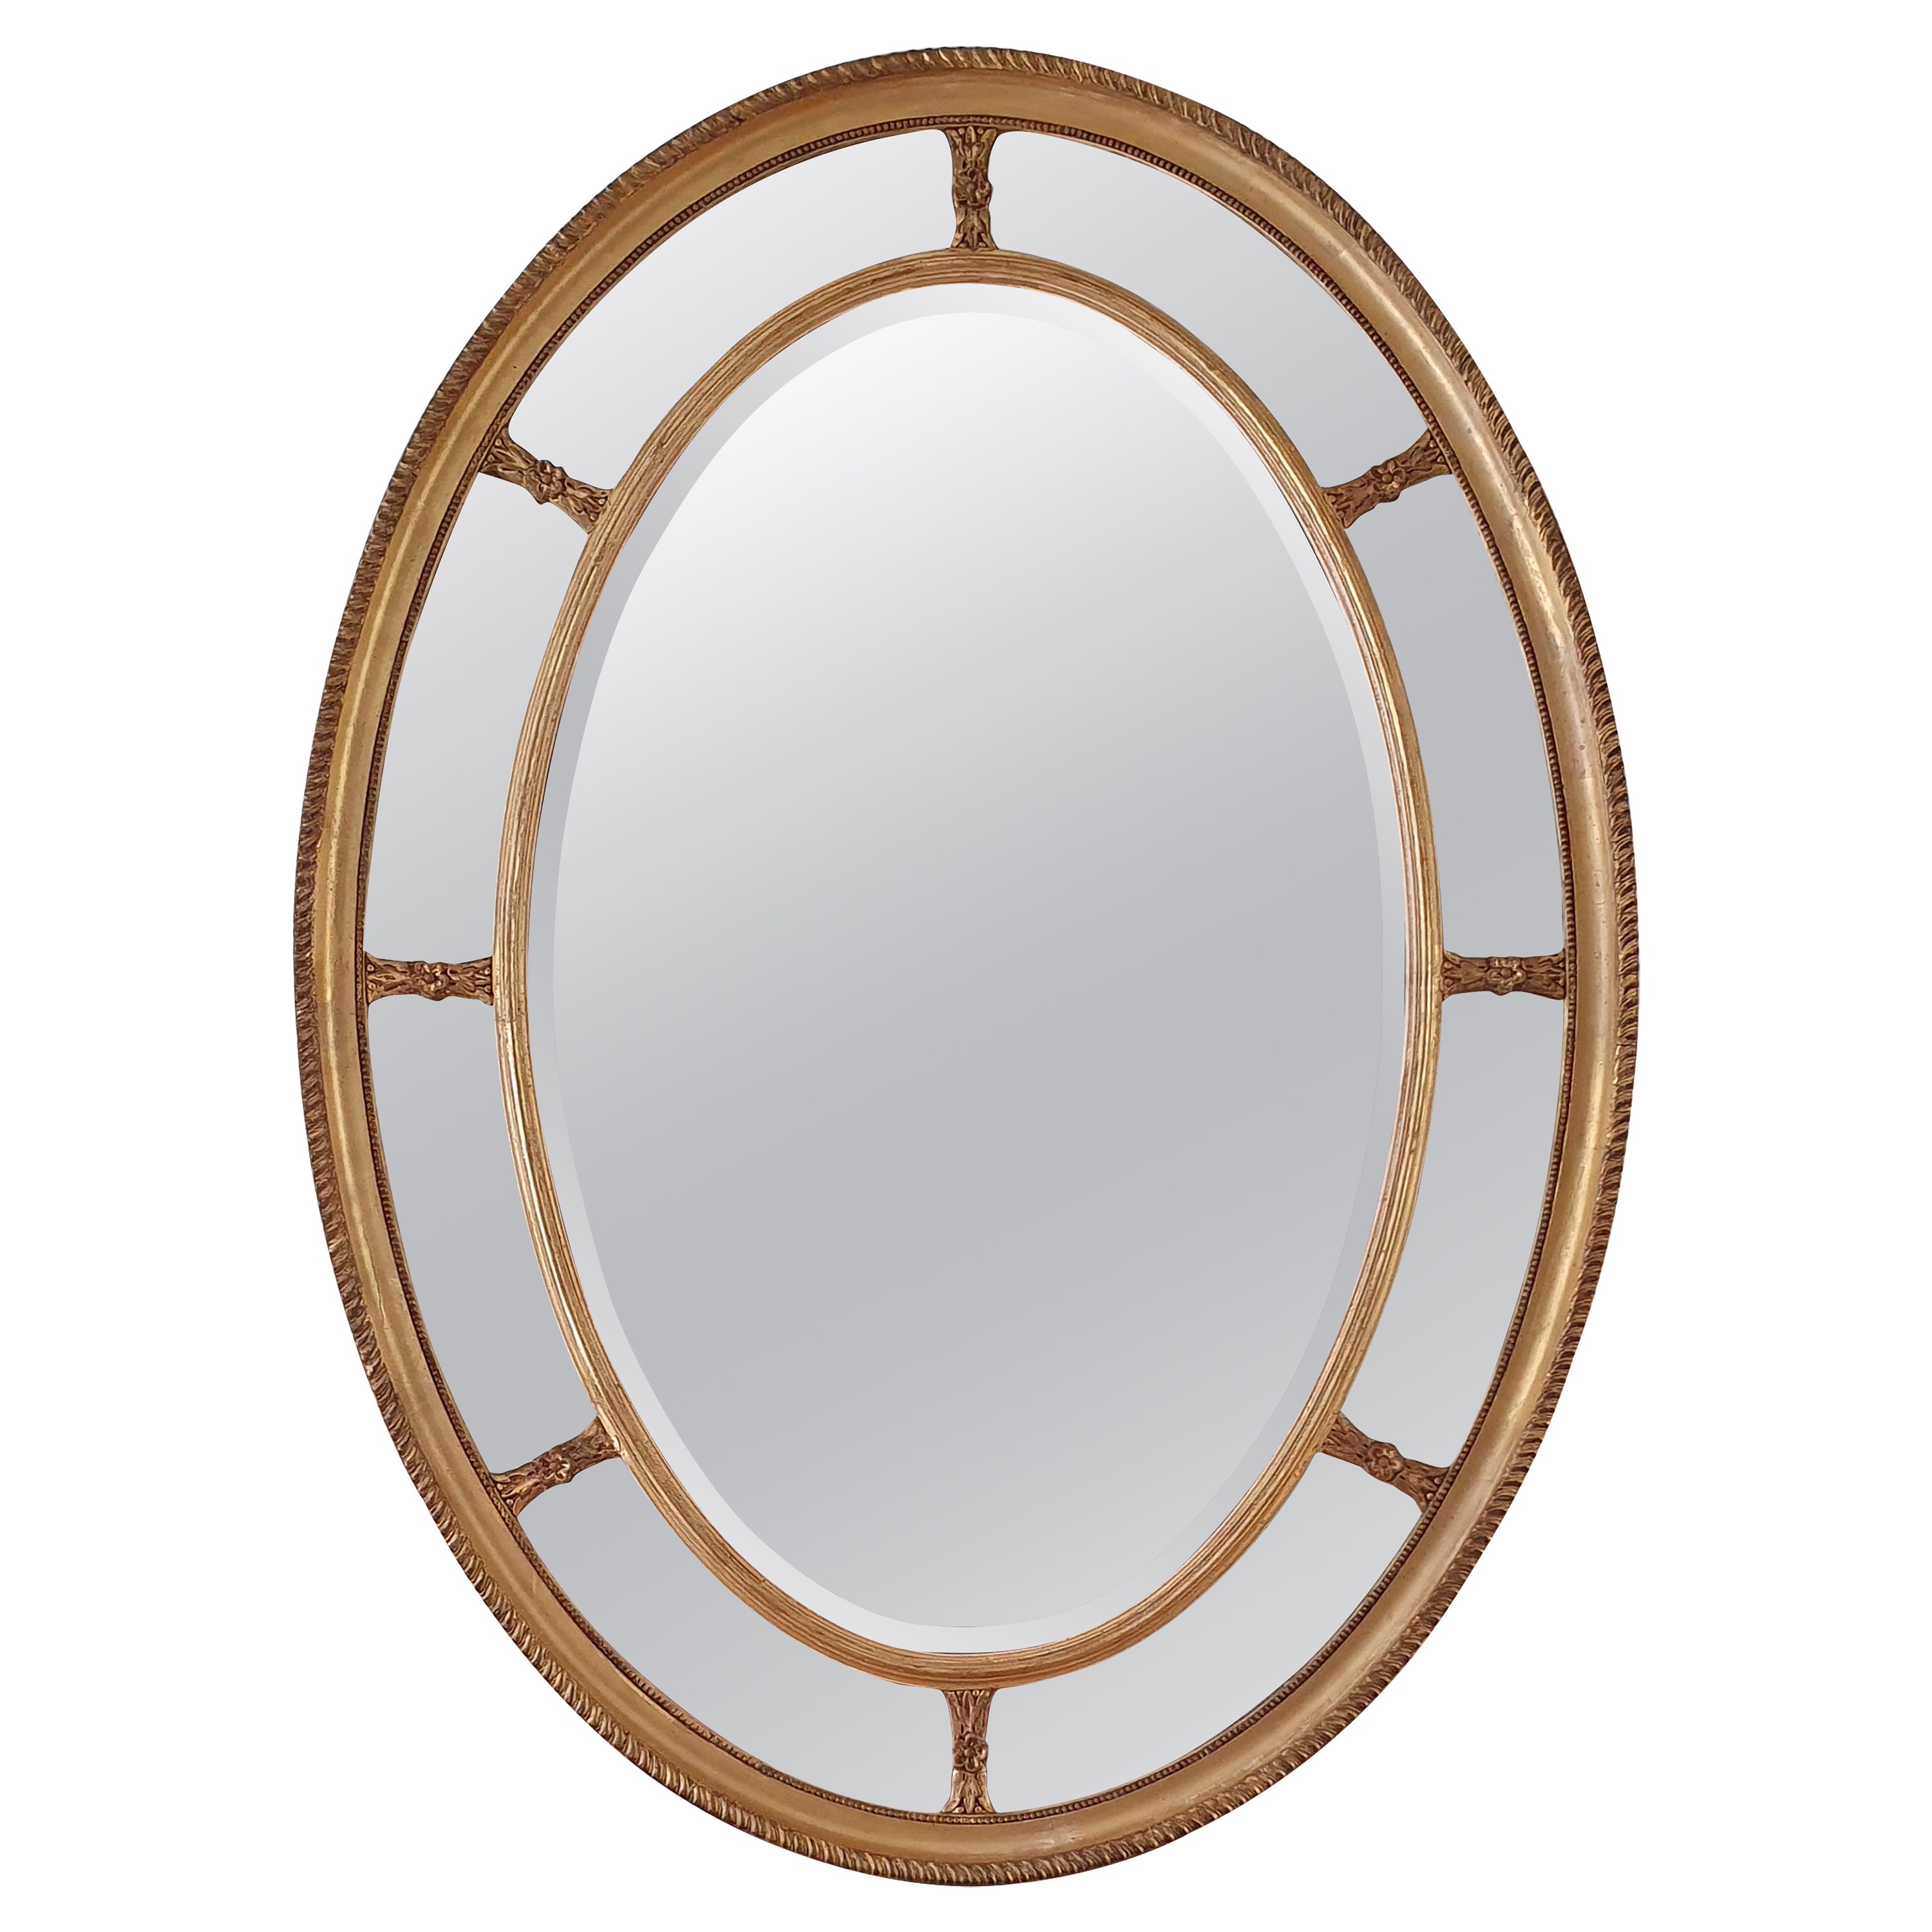 19th century English Adam Style Oval Mirror